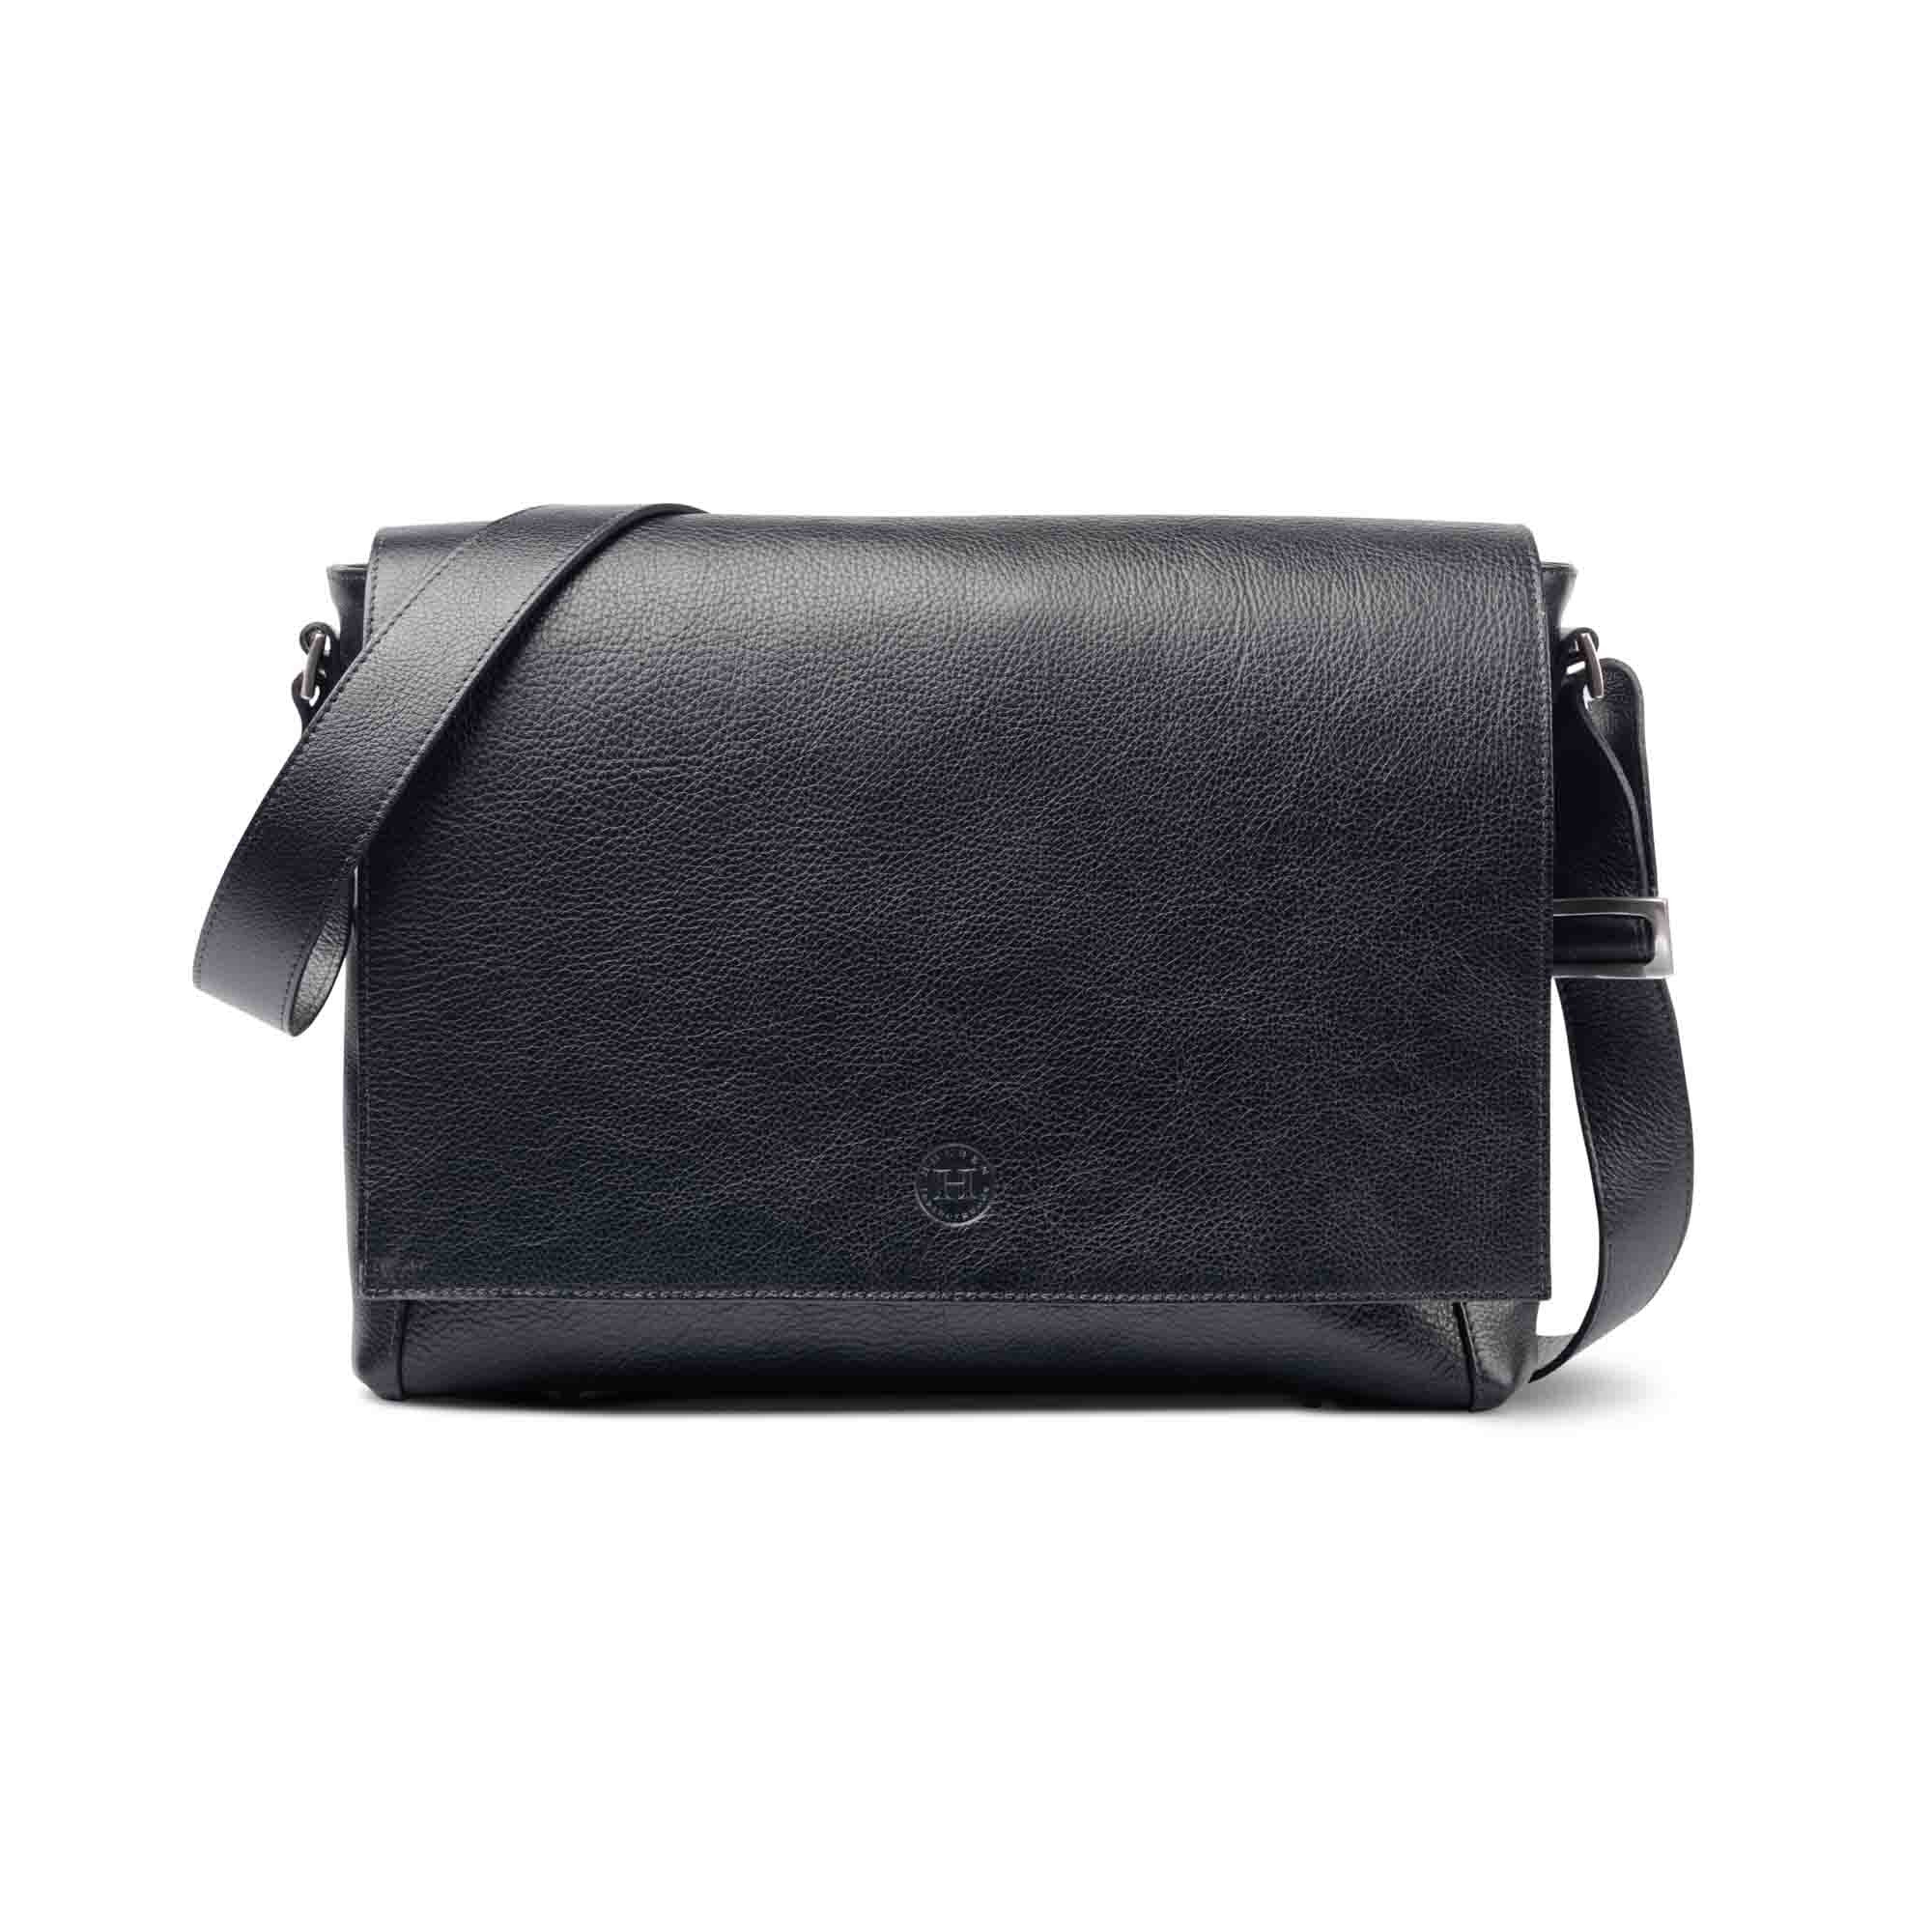 Holden Leather Laptop Bag Black - Holden Leathergoods, leather bags handmade in Ireland